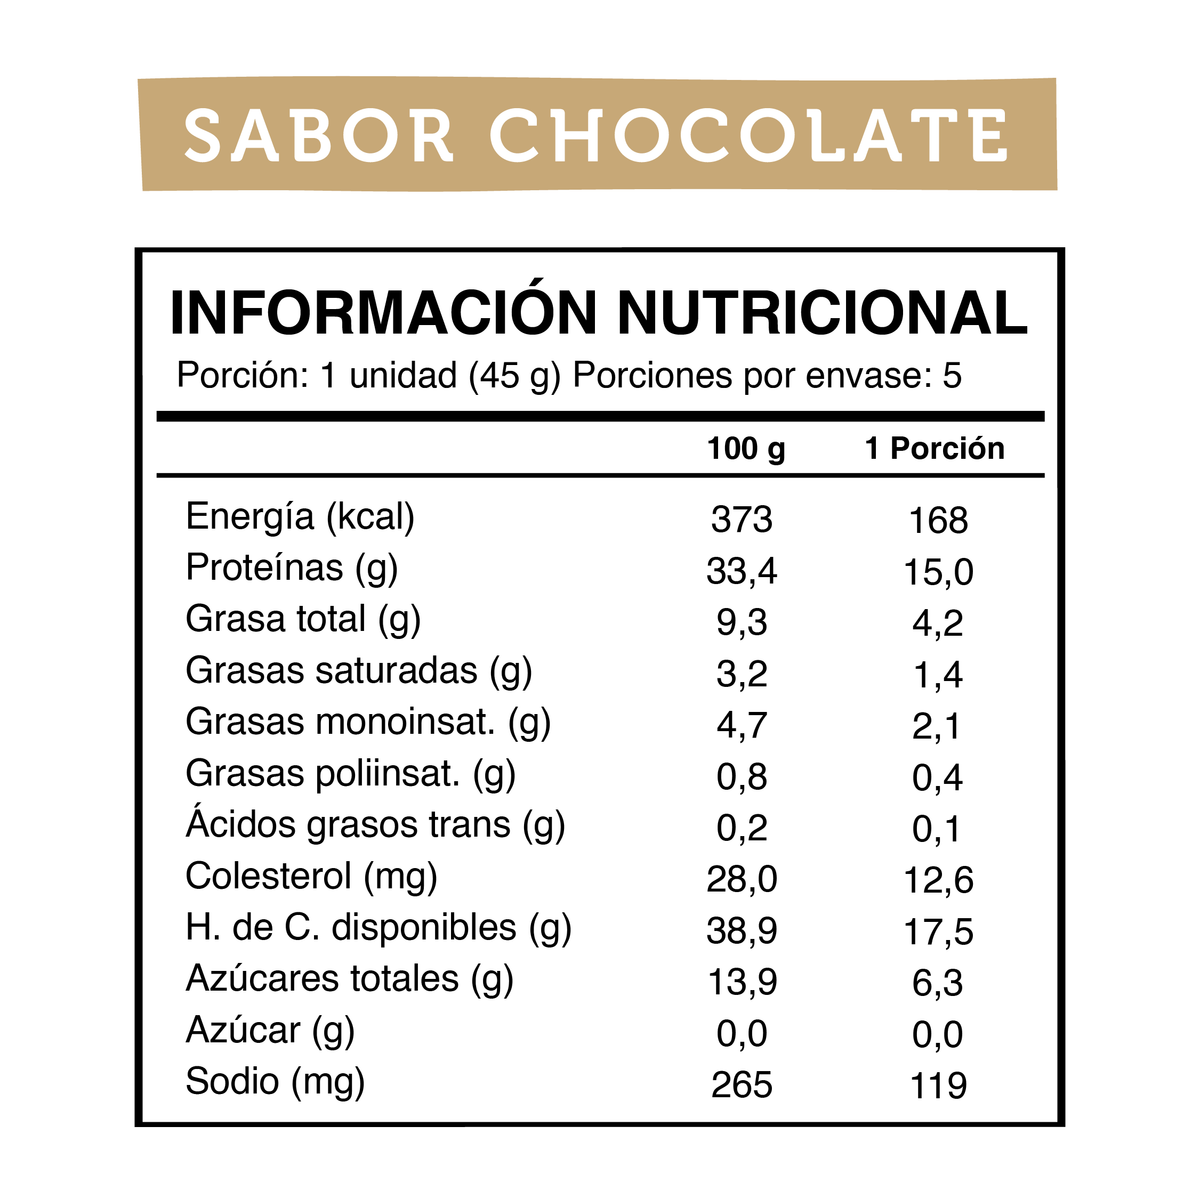 Pack Wild Protein Chocolate 30 Unidades (6 Cajas)